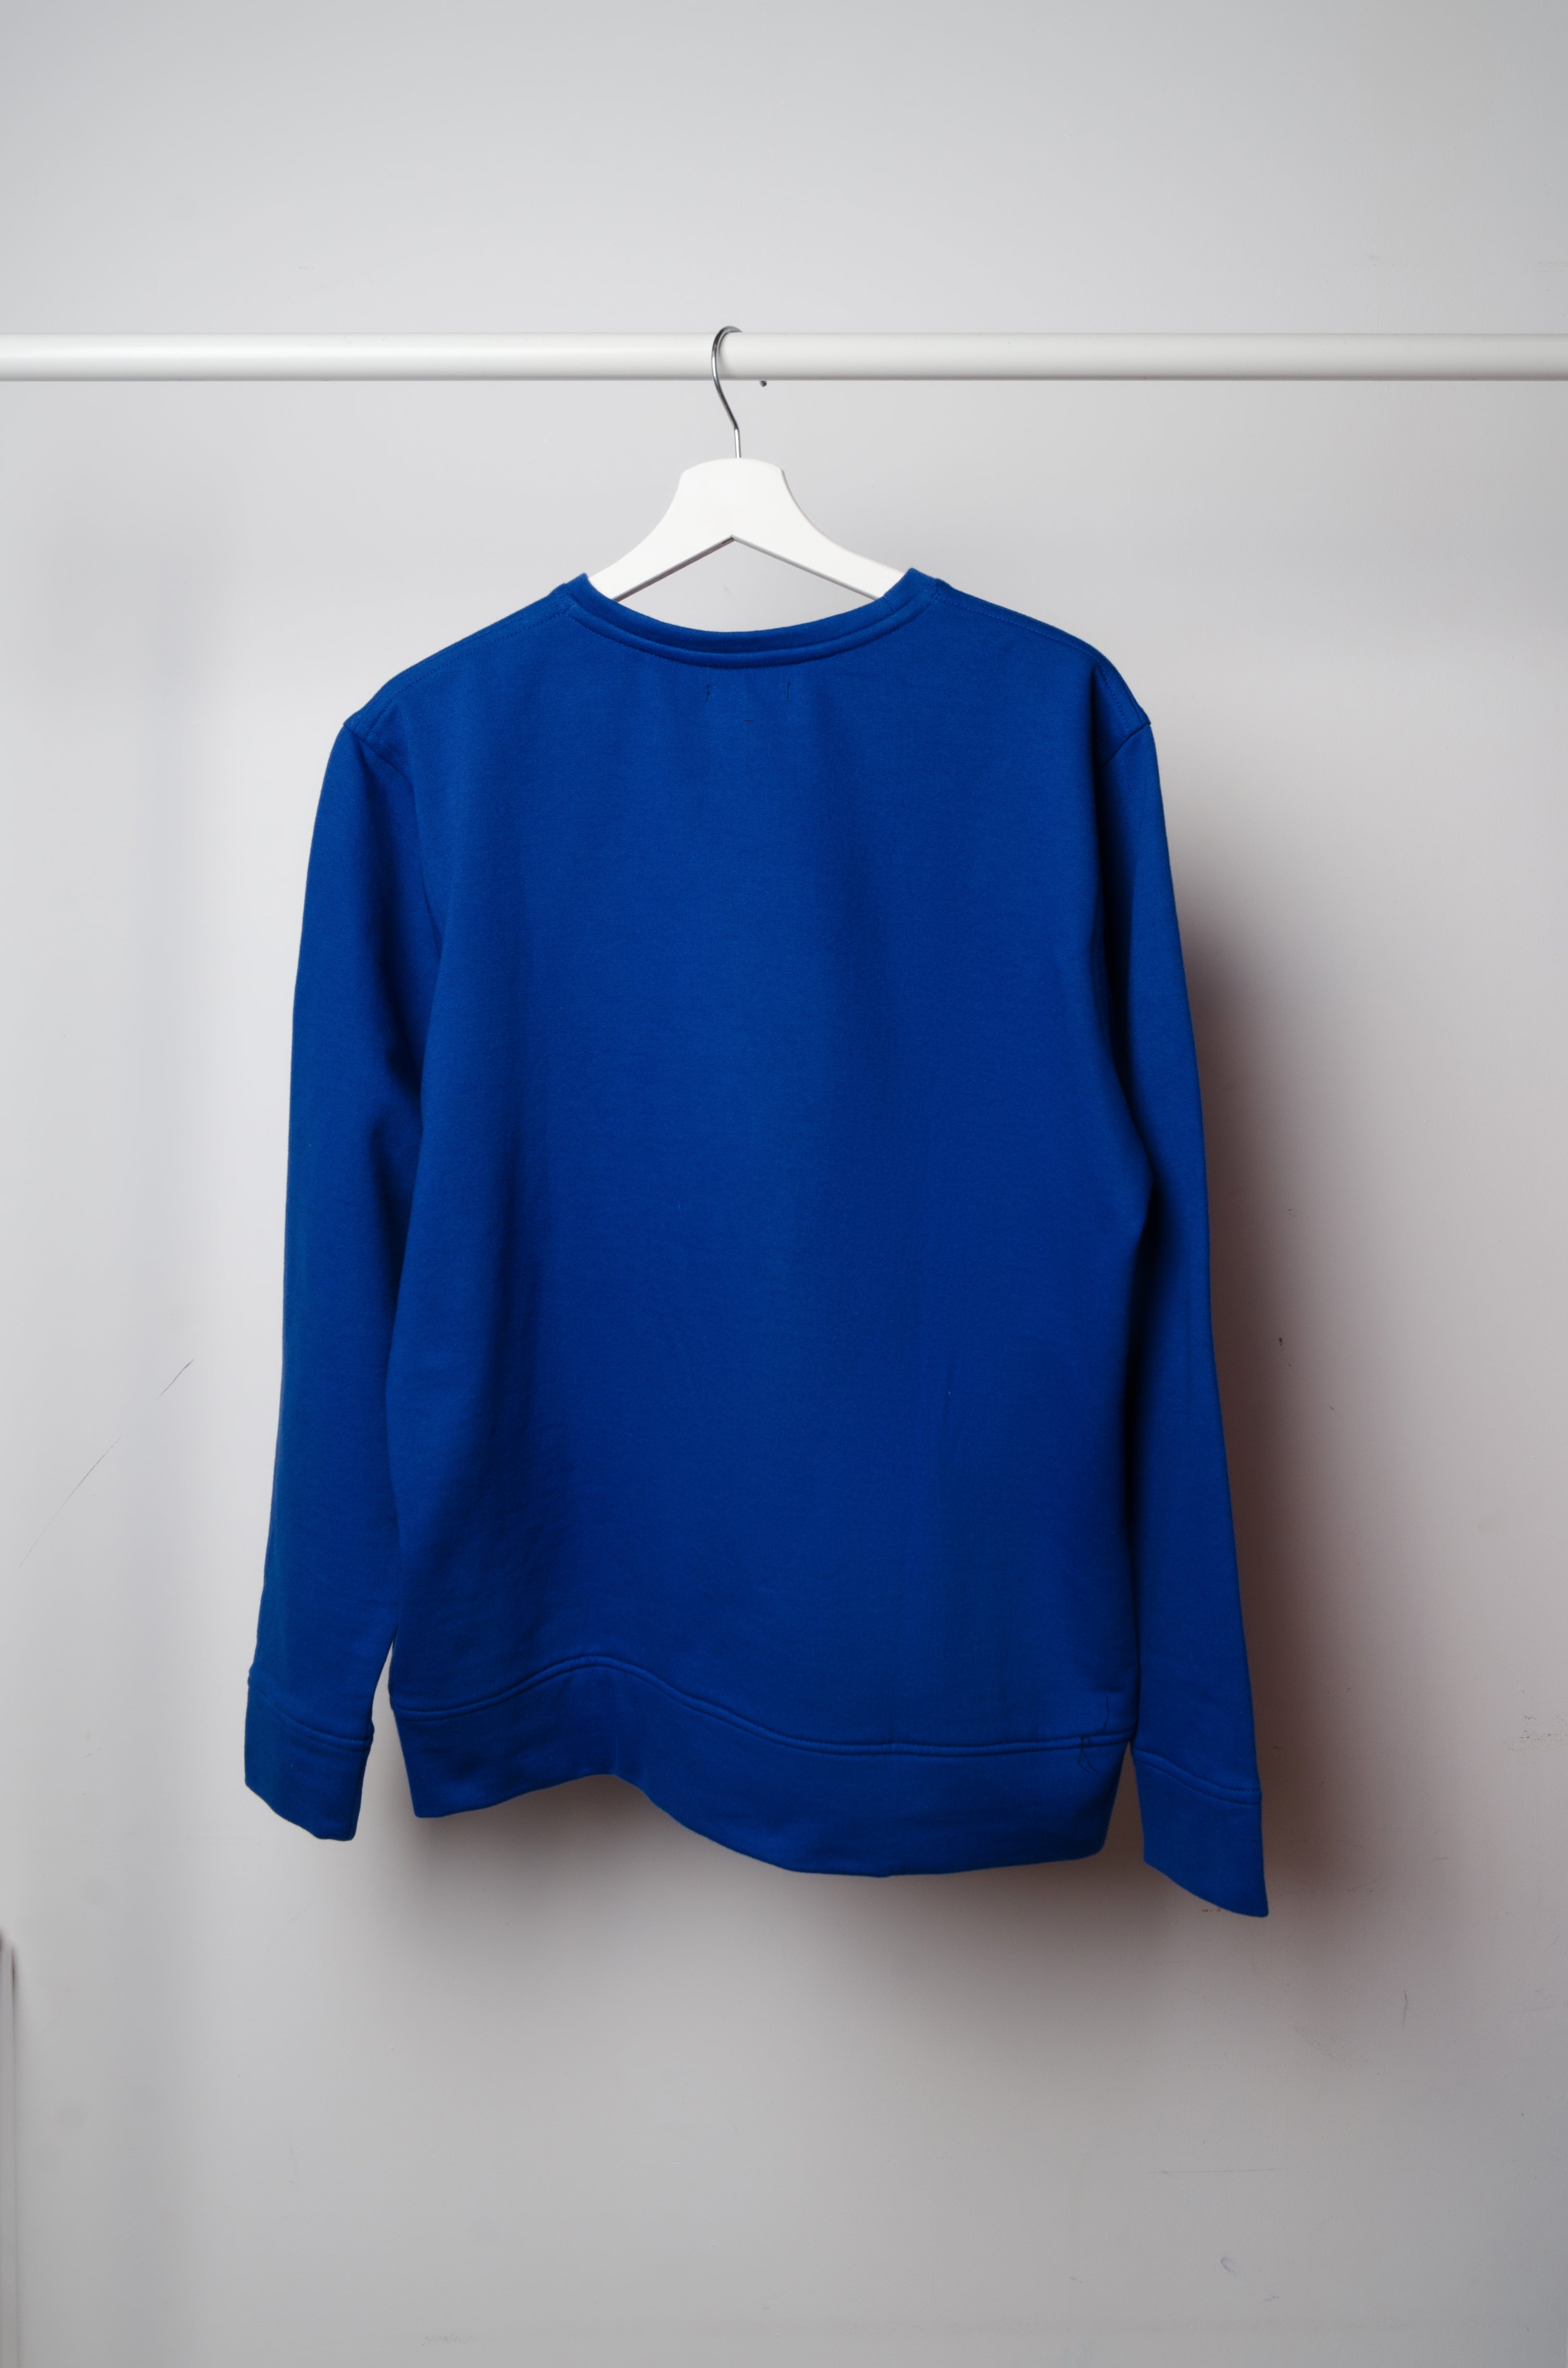 Electric Blue Motif Sweater